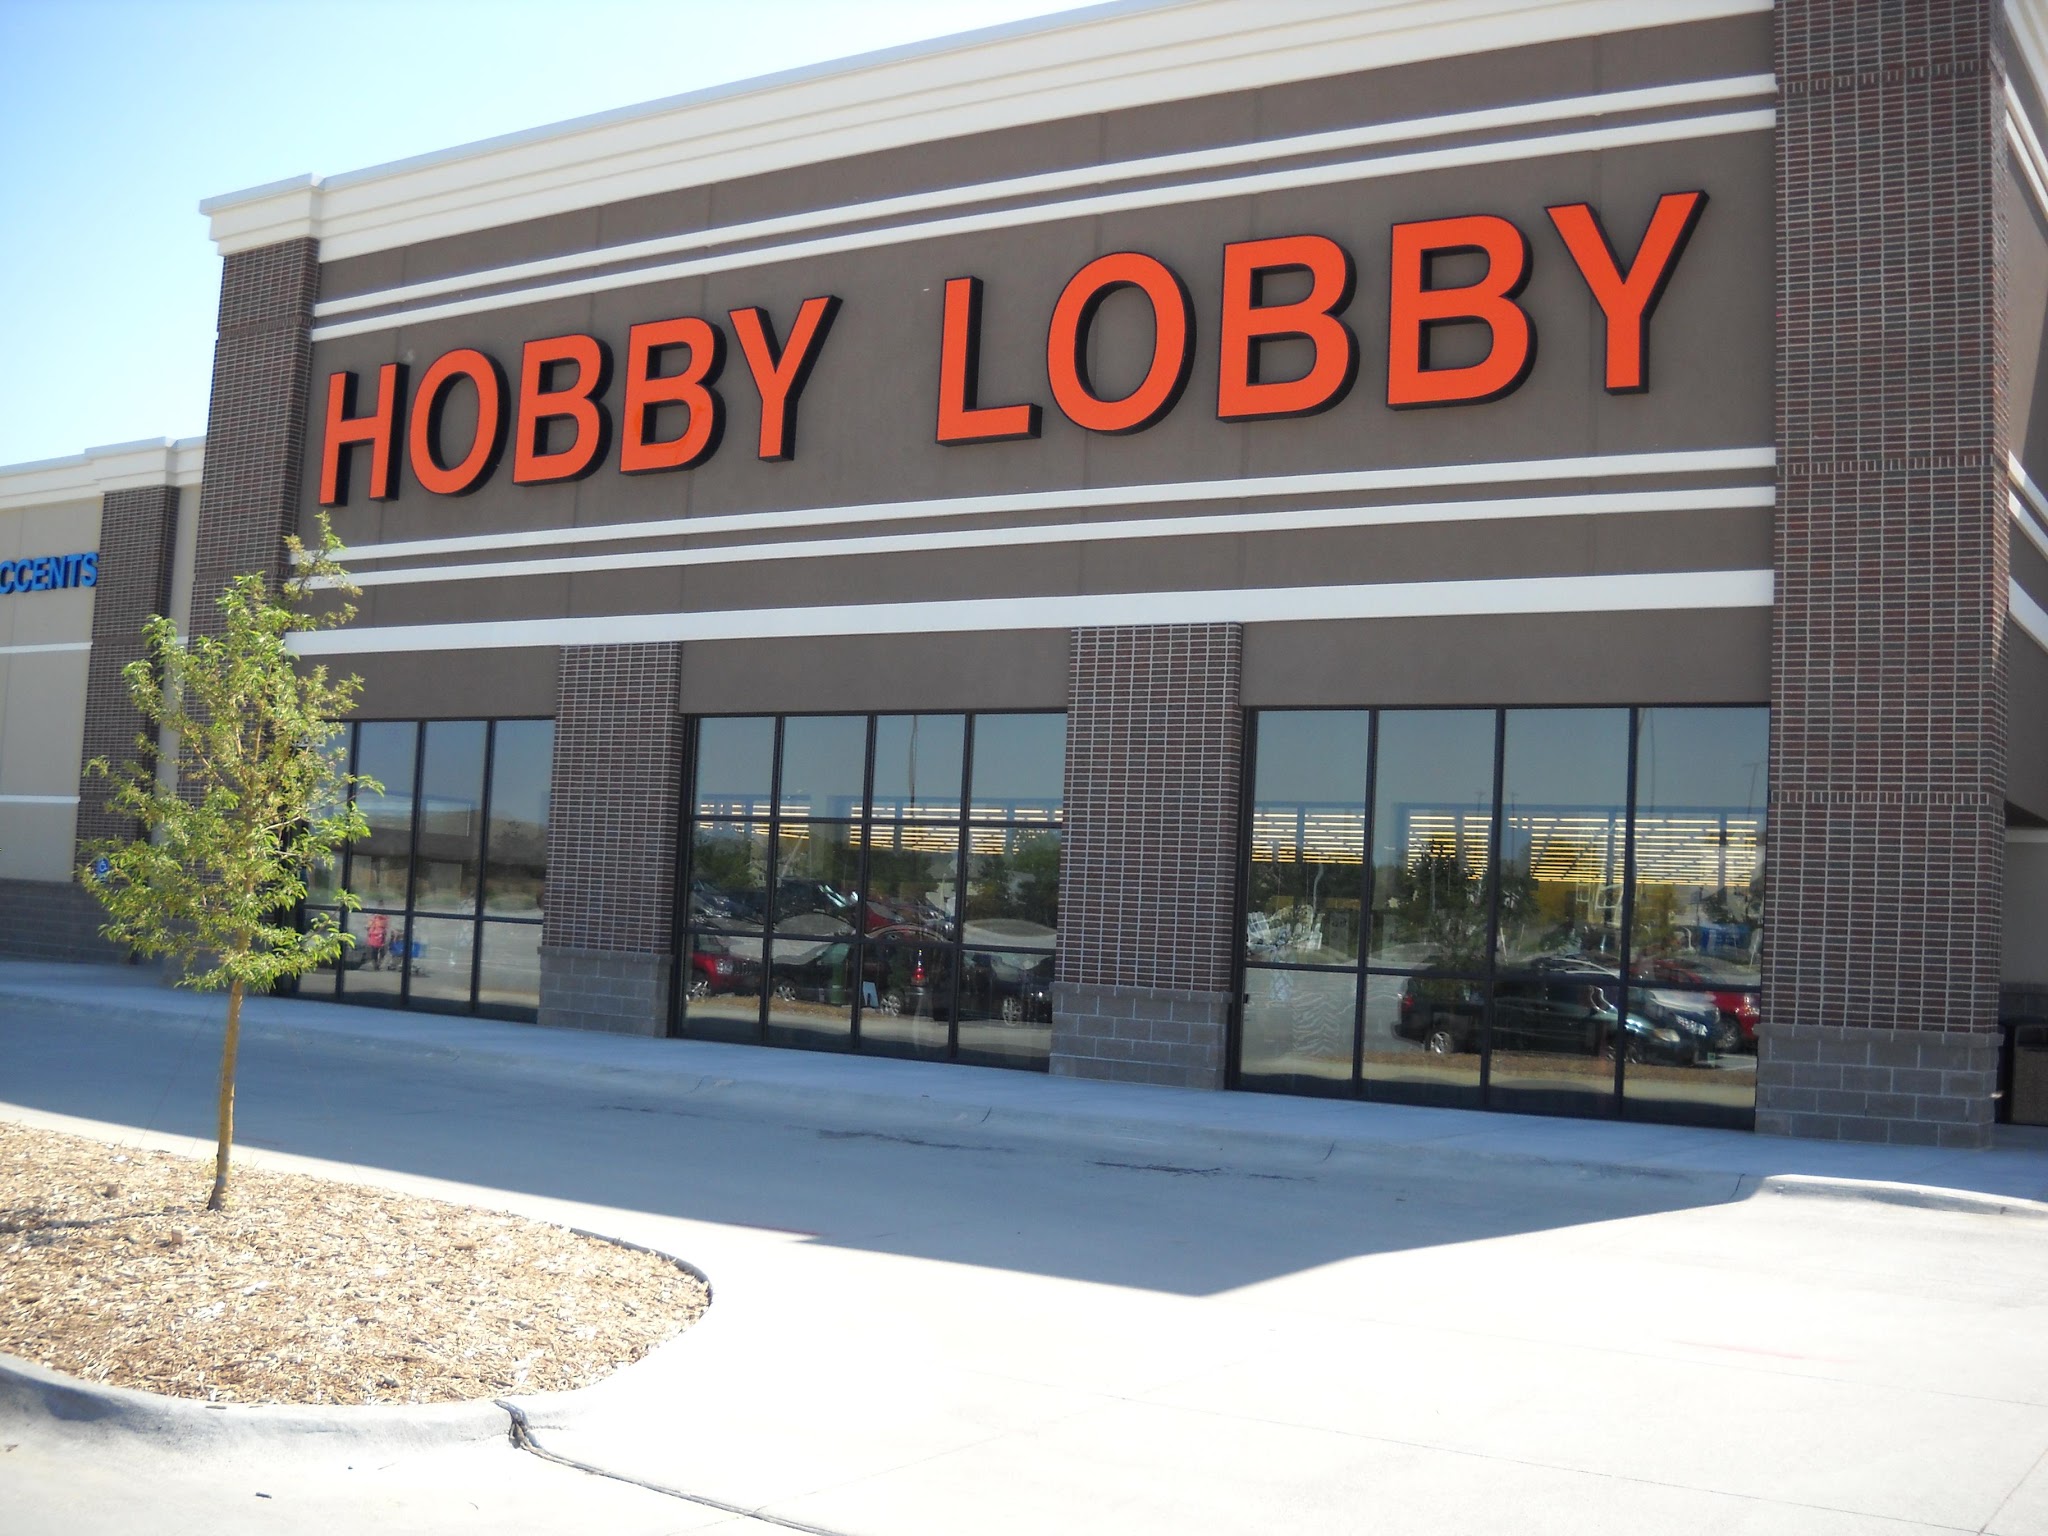 Hobby Lobby Coupons near me in Papillion, NE 68133 | 8coupons on Hobby Lobby Hrs id=26643